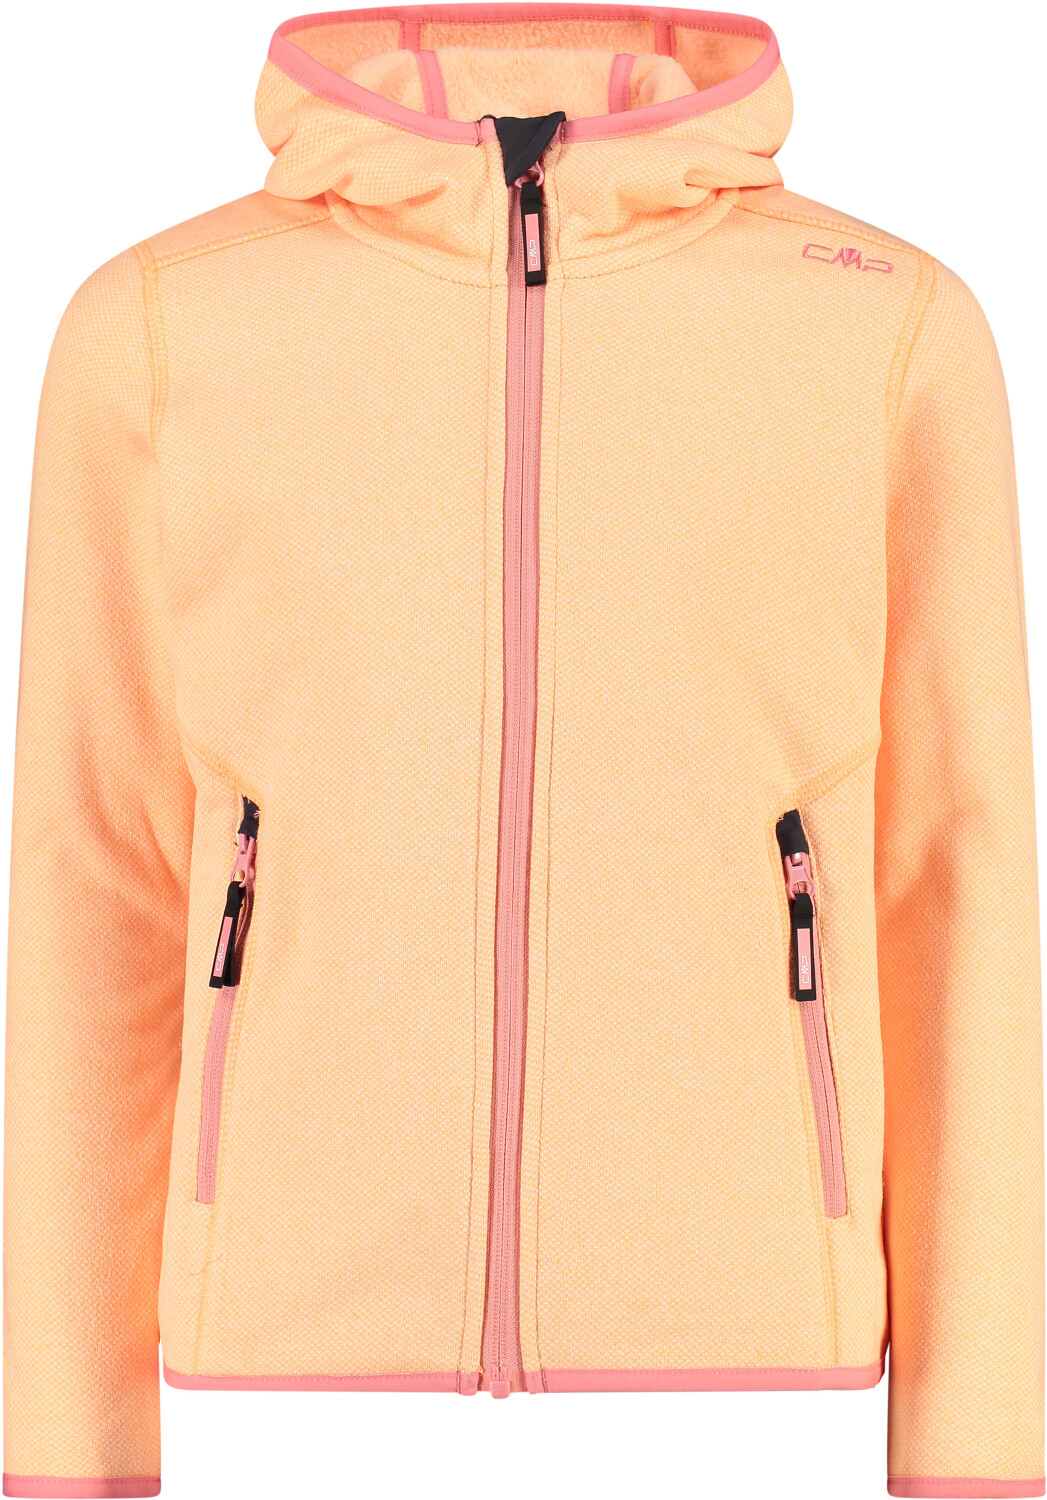 ab melone/pesca/bianco (3H19825) bei Fleece-Jacket CMP € | Knit-Tech Preisvergleich Girl 11,56